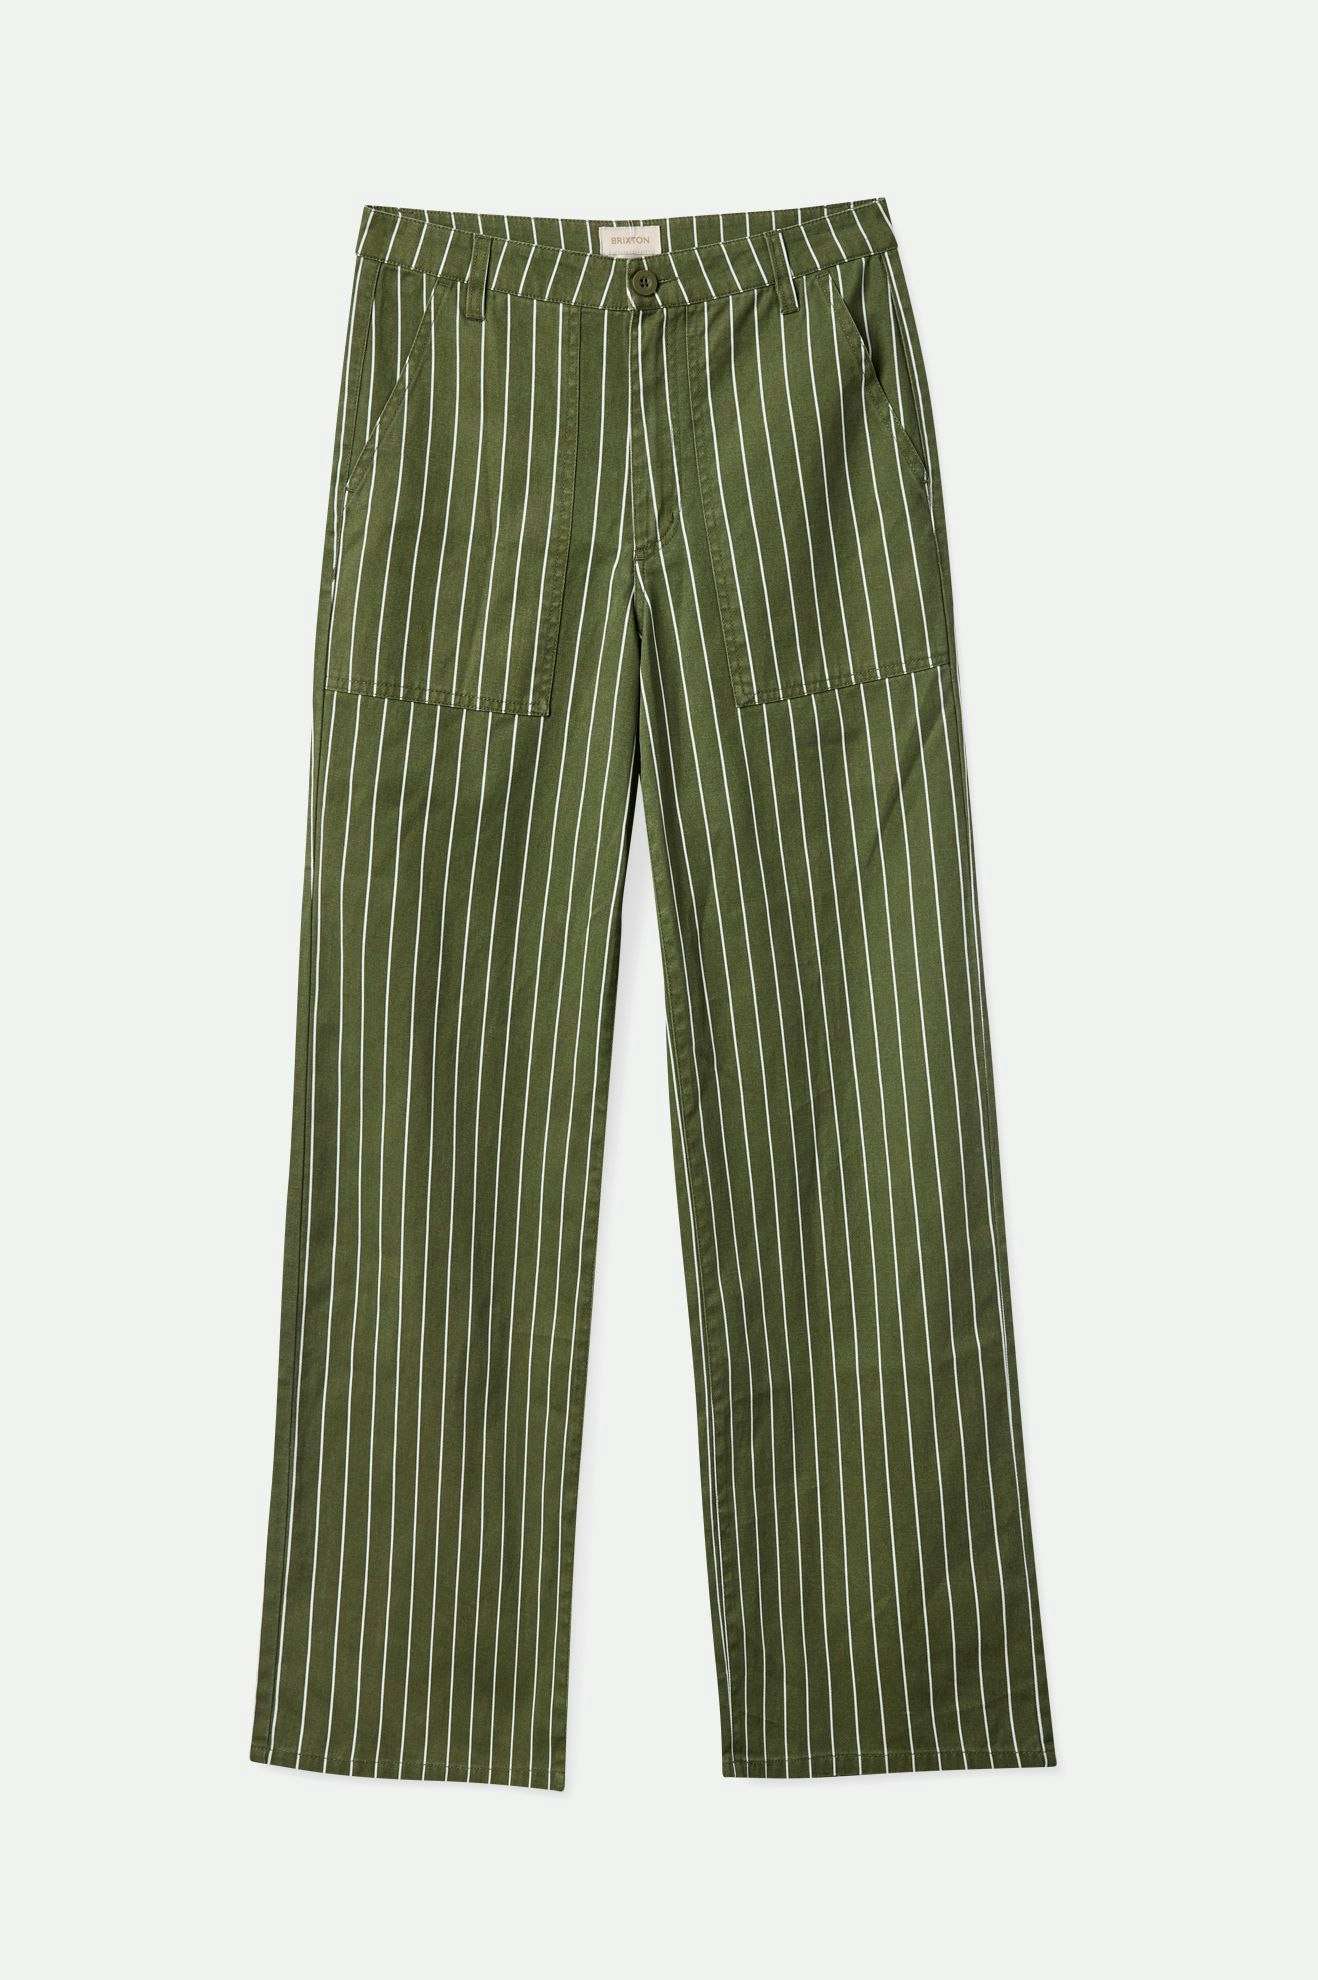 Brixton Women's Vintage Military Lightweight Pant - Olive Surplus/Whitecap Pinstripe | Main